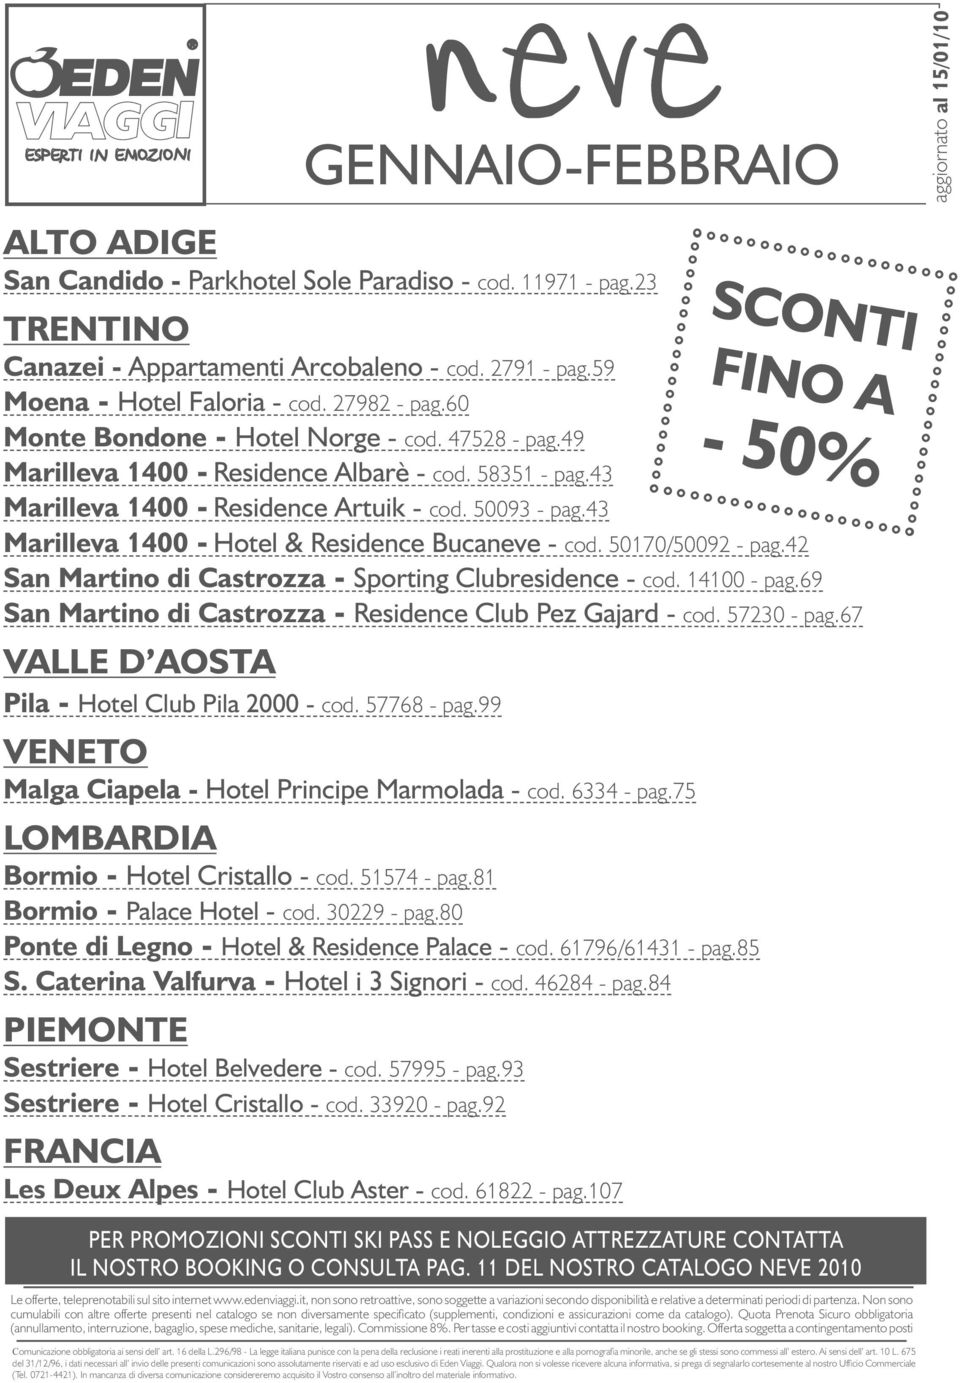 43 Marilleva 1400 - Hotel & Residence Bucaneve - cod. 50170/50092 - pag.42 San Martino di Castrozza - Sporting Clubresidence - cod. 14100 - pag.